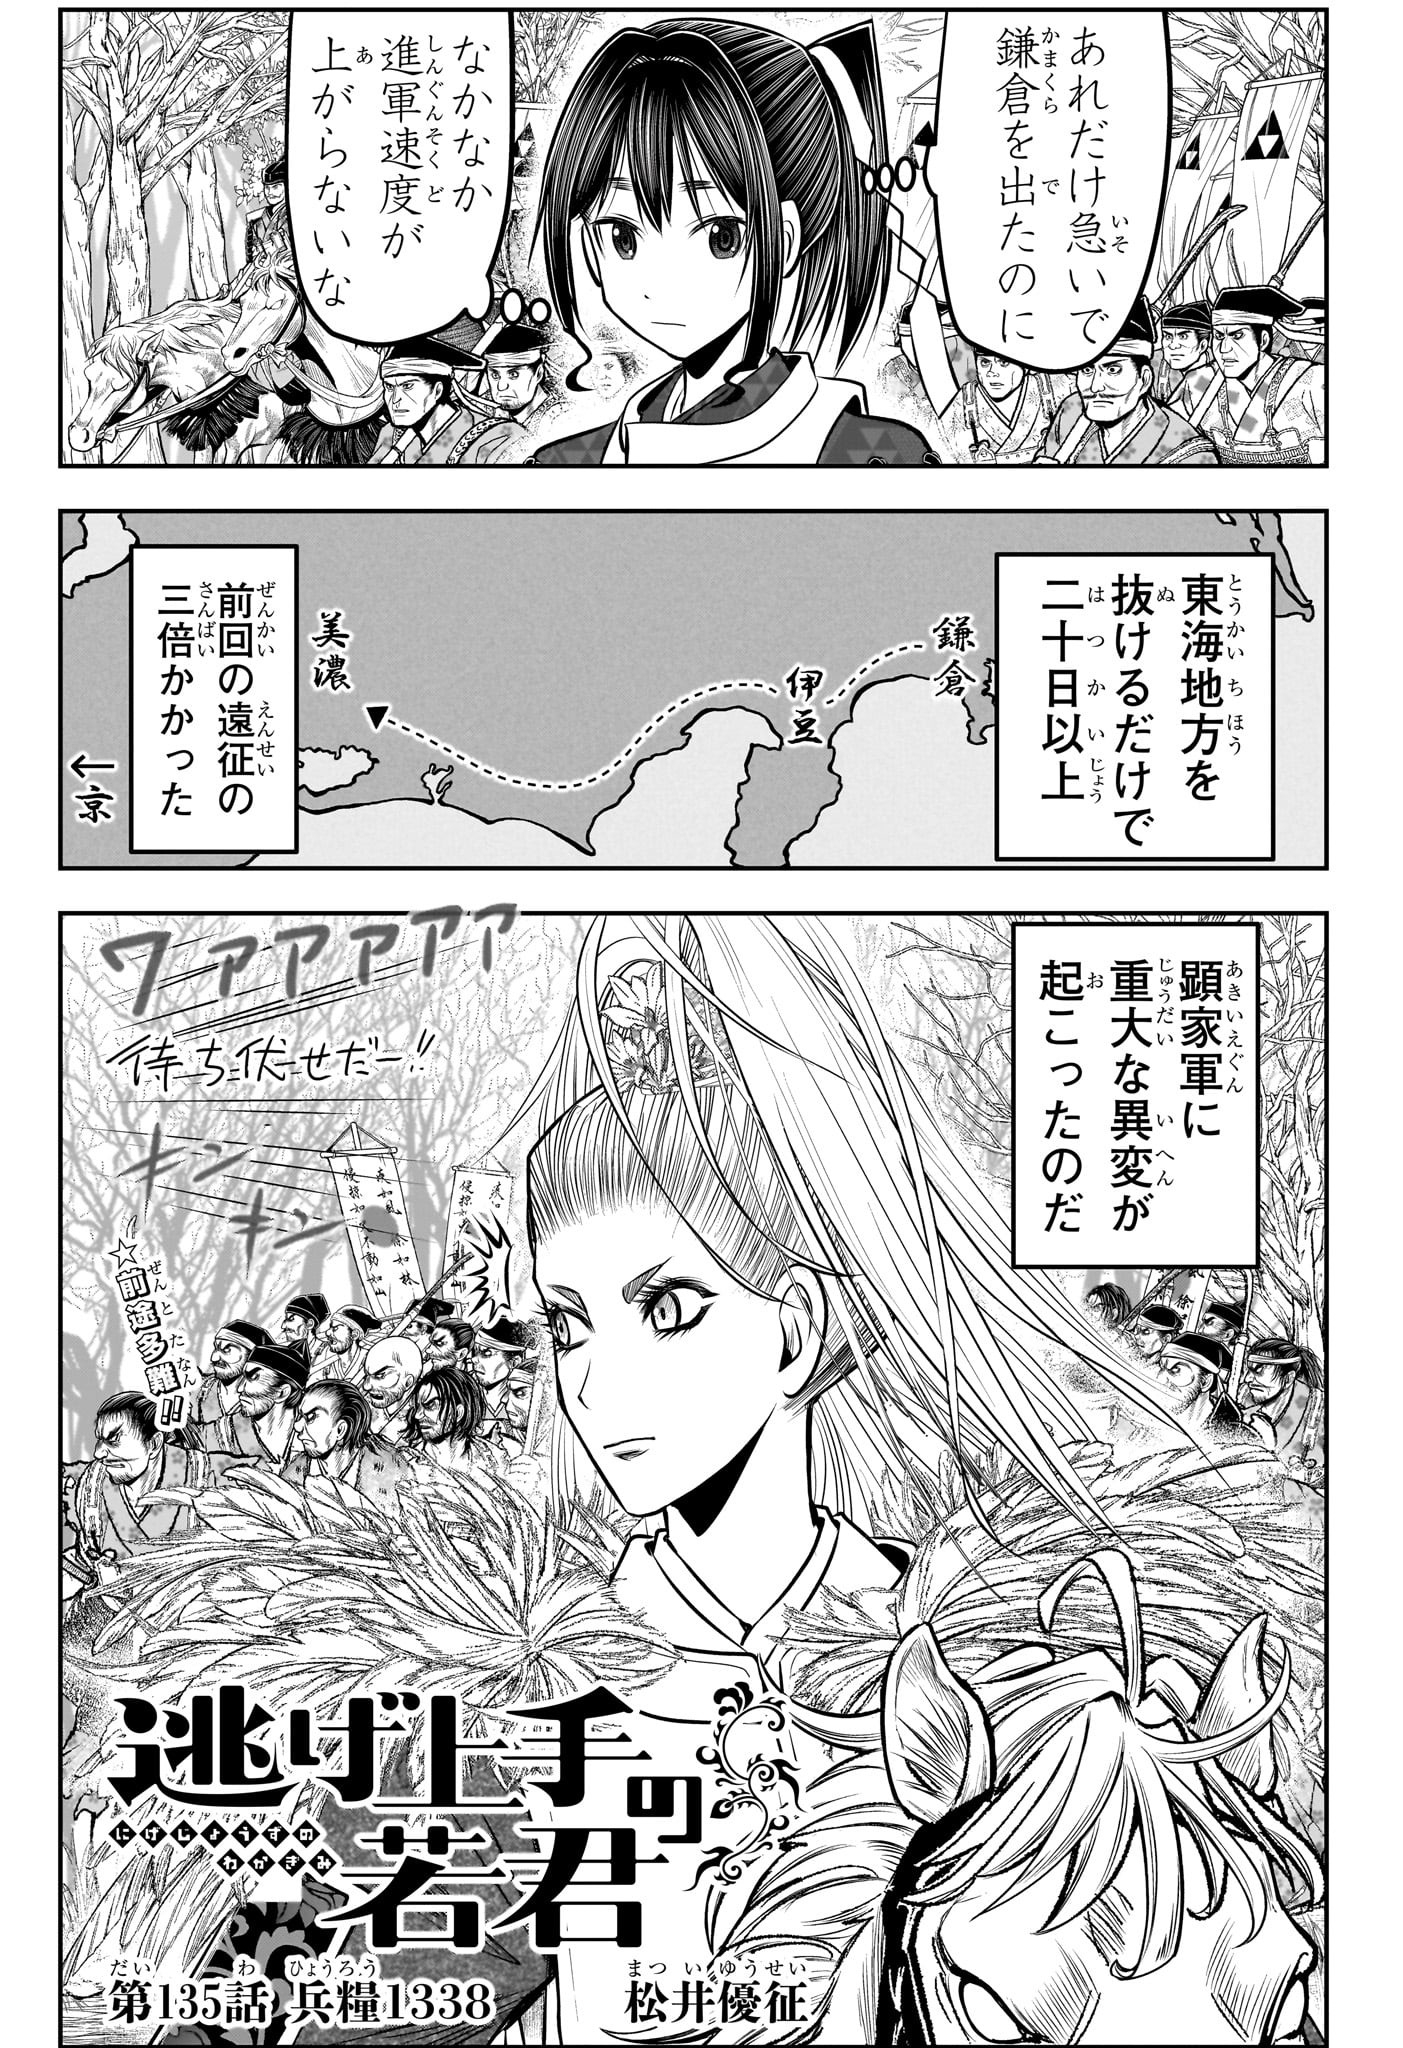 Nige Jouzu no Wakagimi - Chapter 135 - Page 1